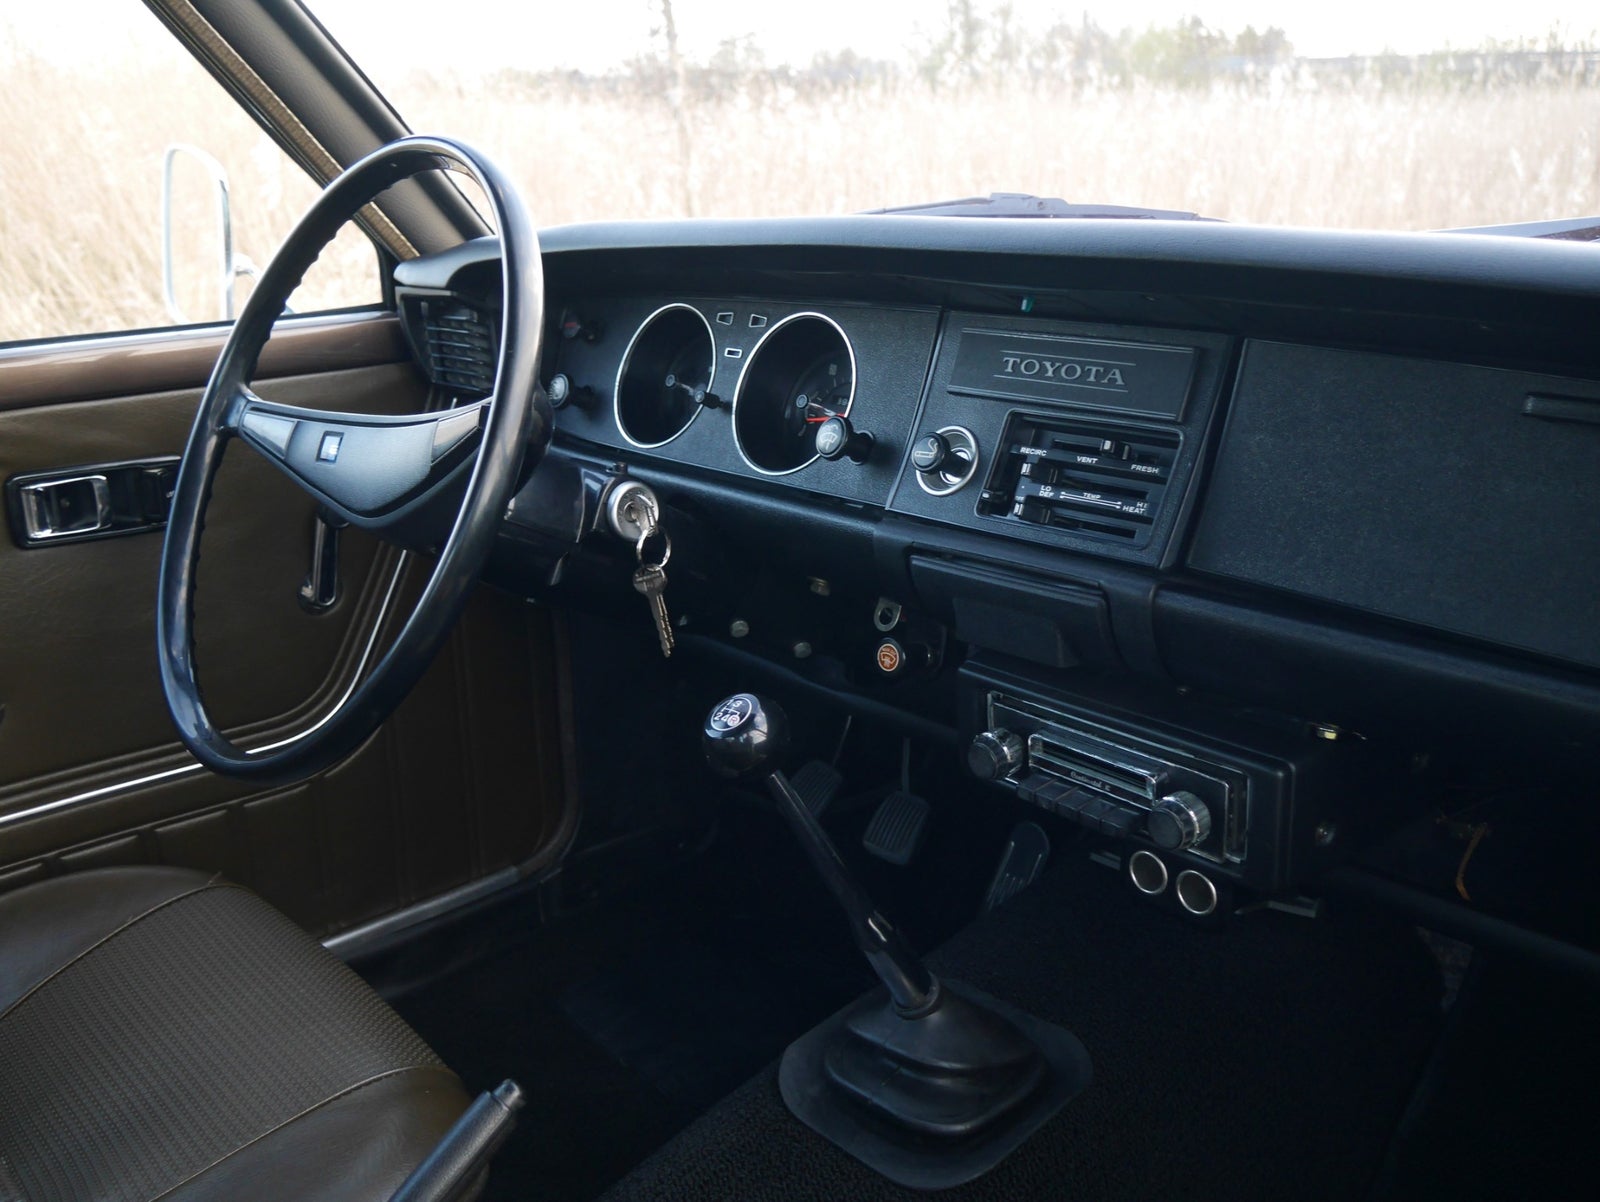 Toyota Corolla 1,2 Benzin modelår 1972 km 139000 Brunmetal